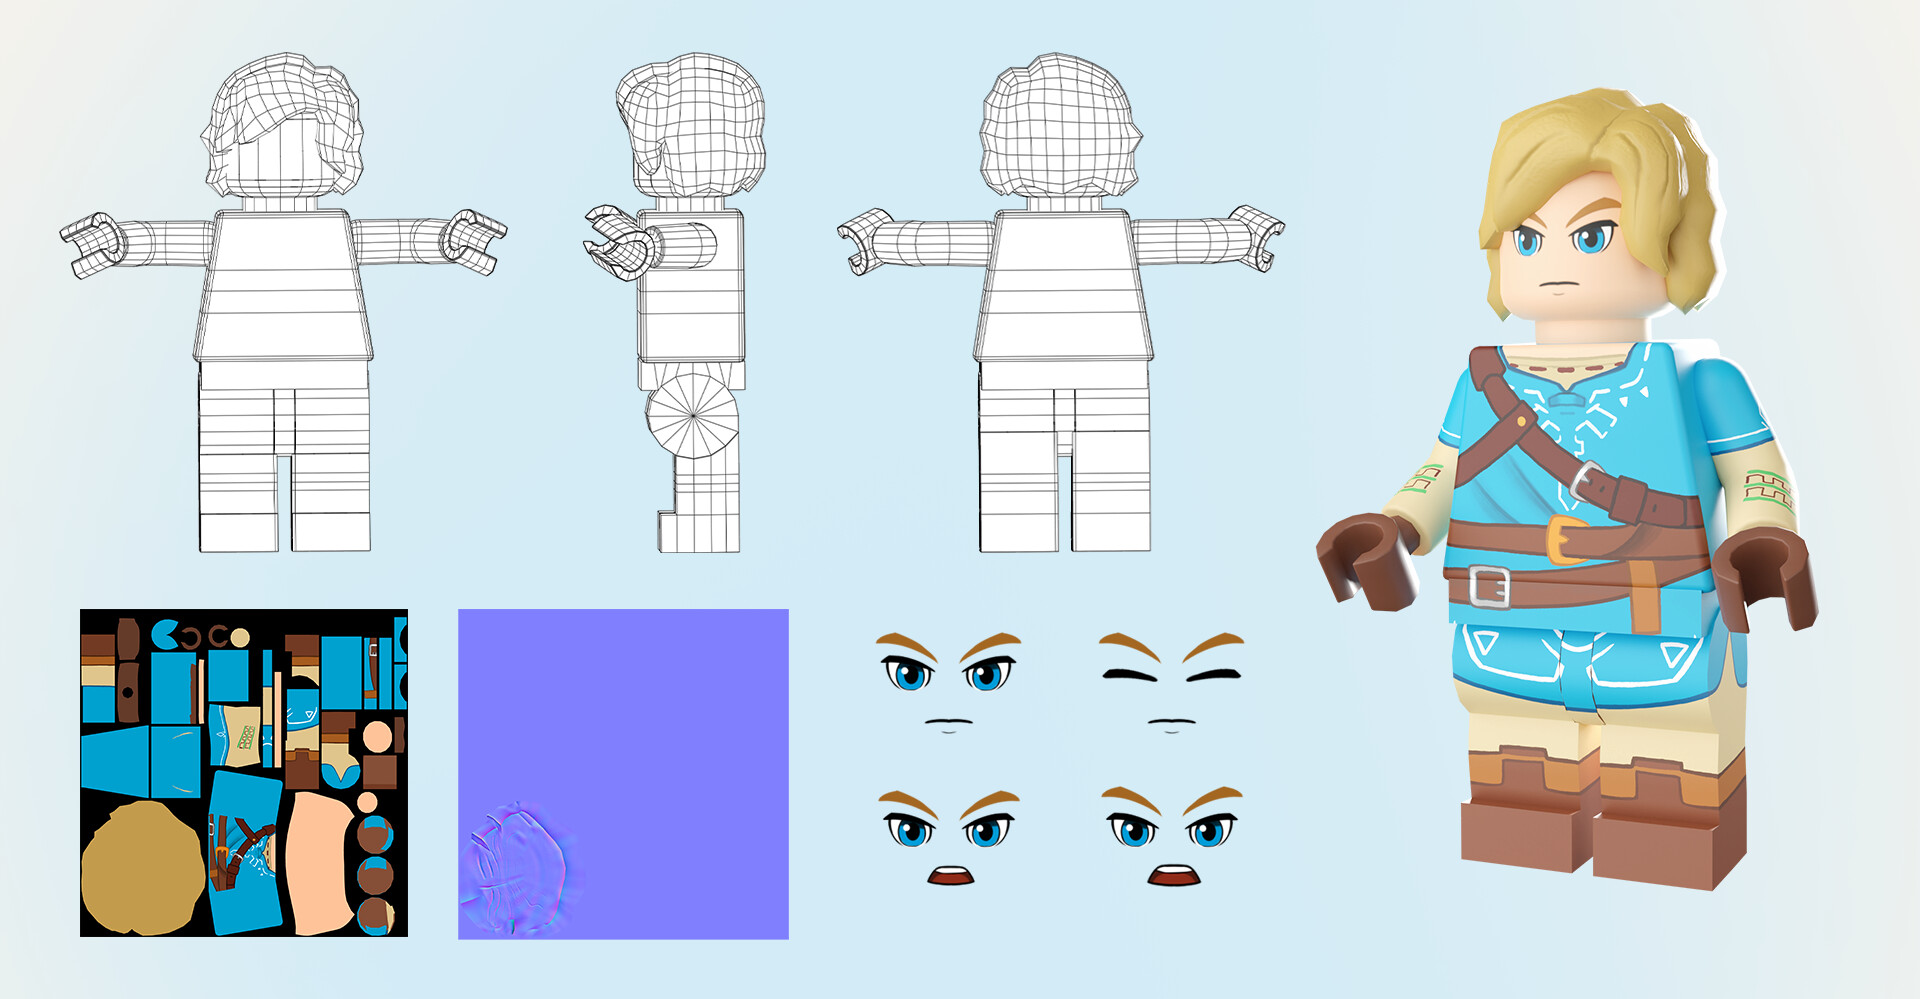 ArtStation - Game Character 01 - Lego Link